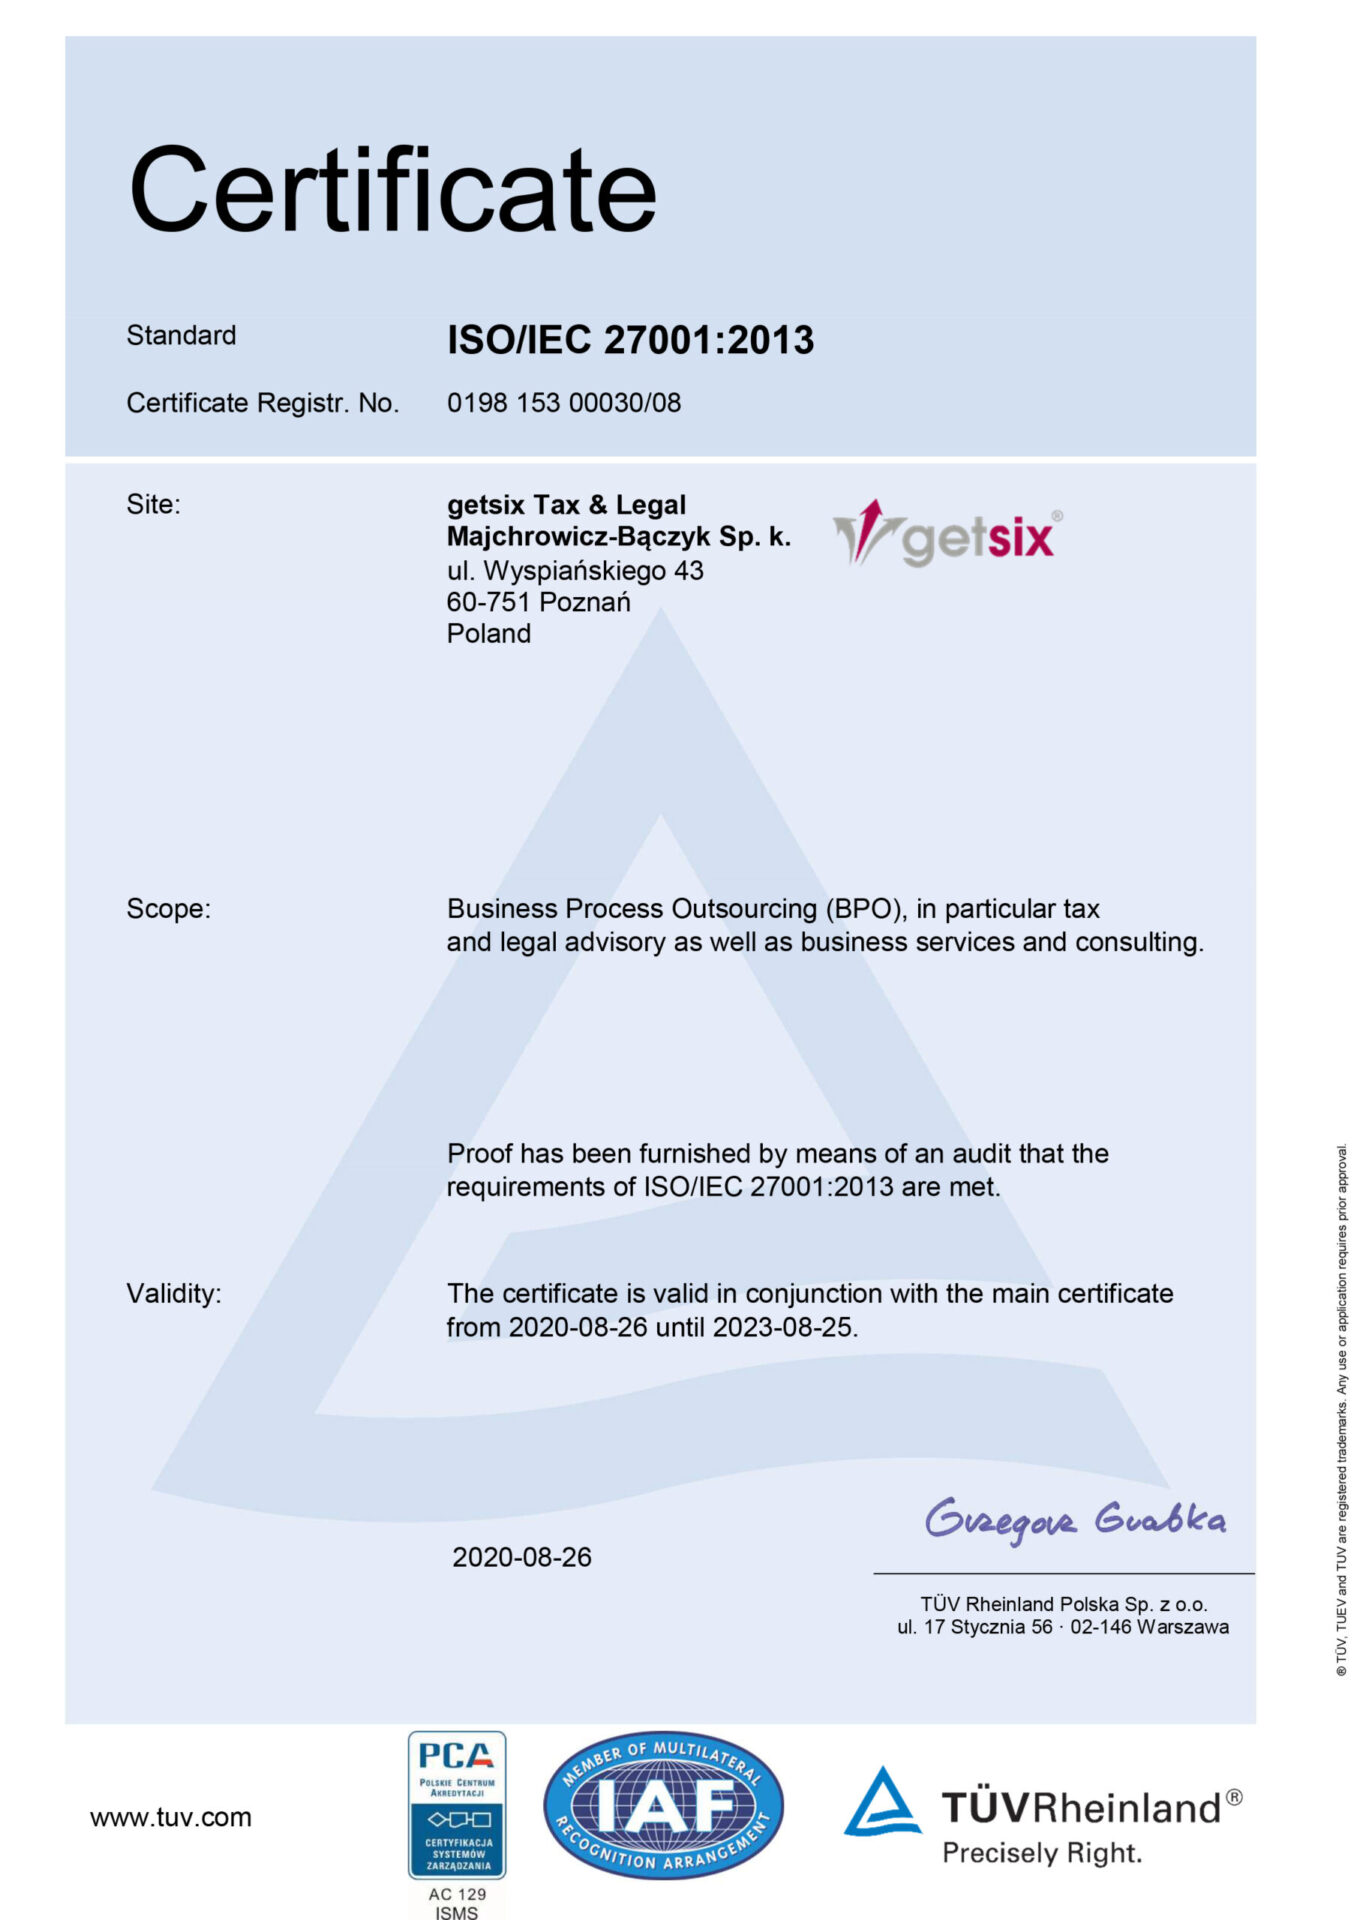 getsix Tax & Legal ISO 27001 Certificate